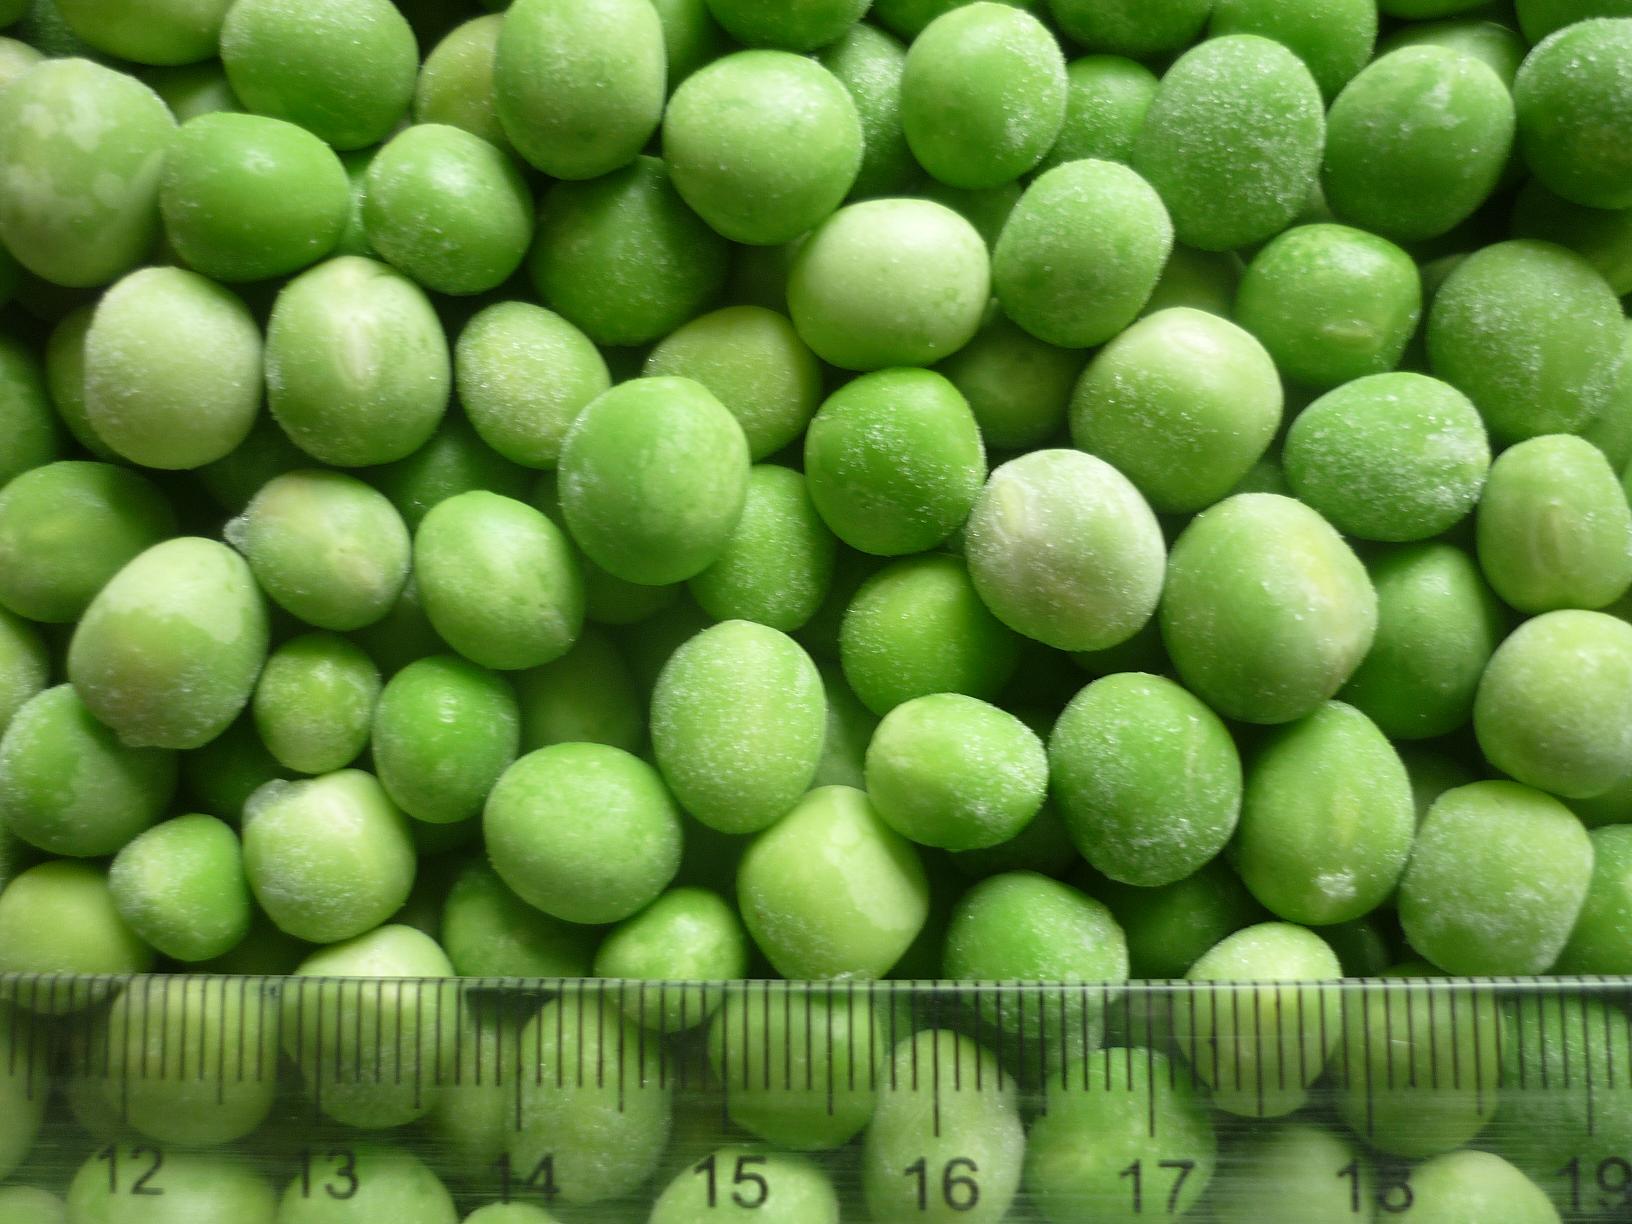 A.IQF Frozen Green Peas